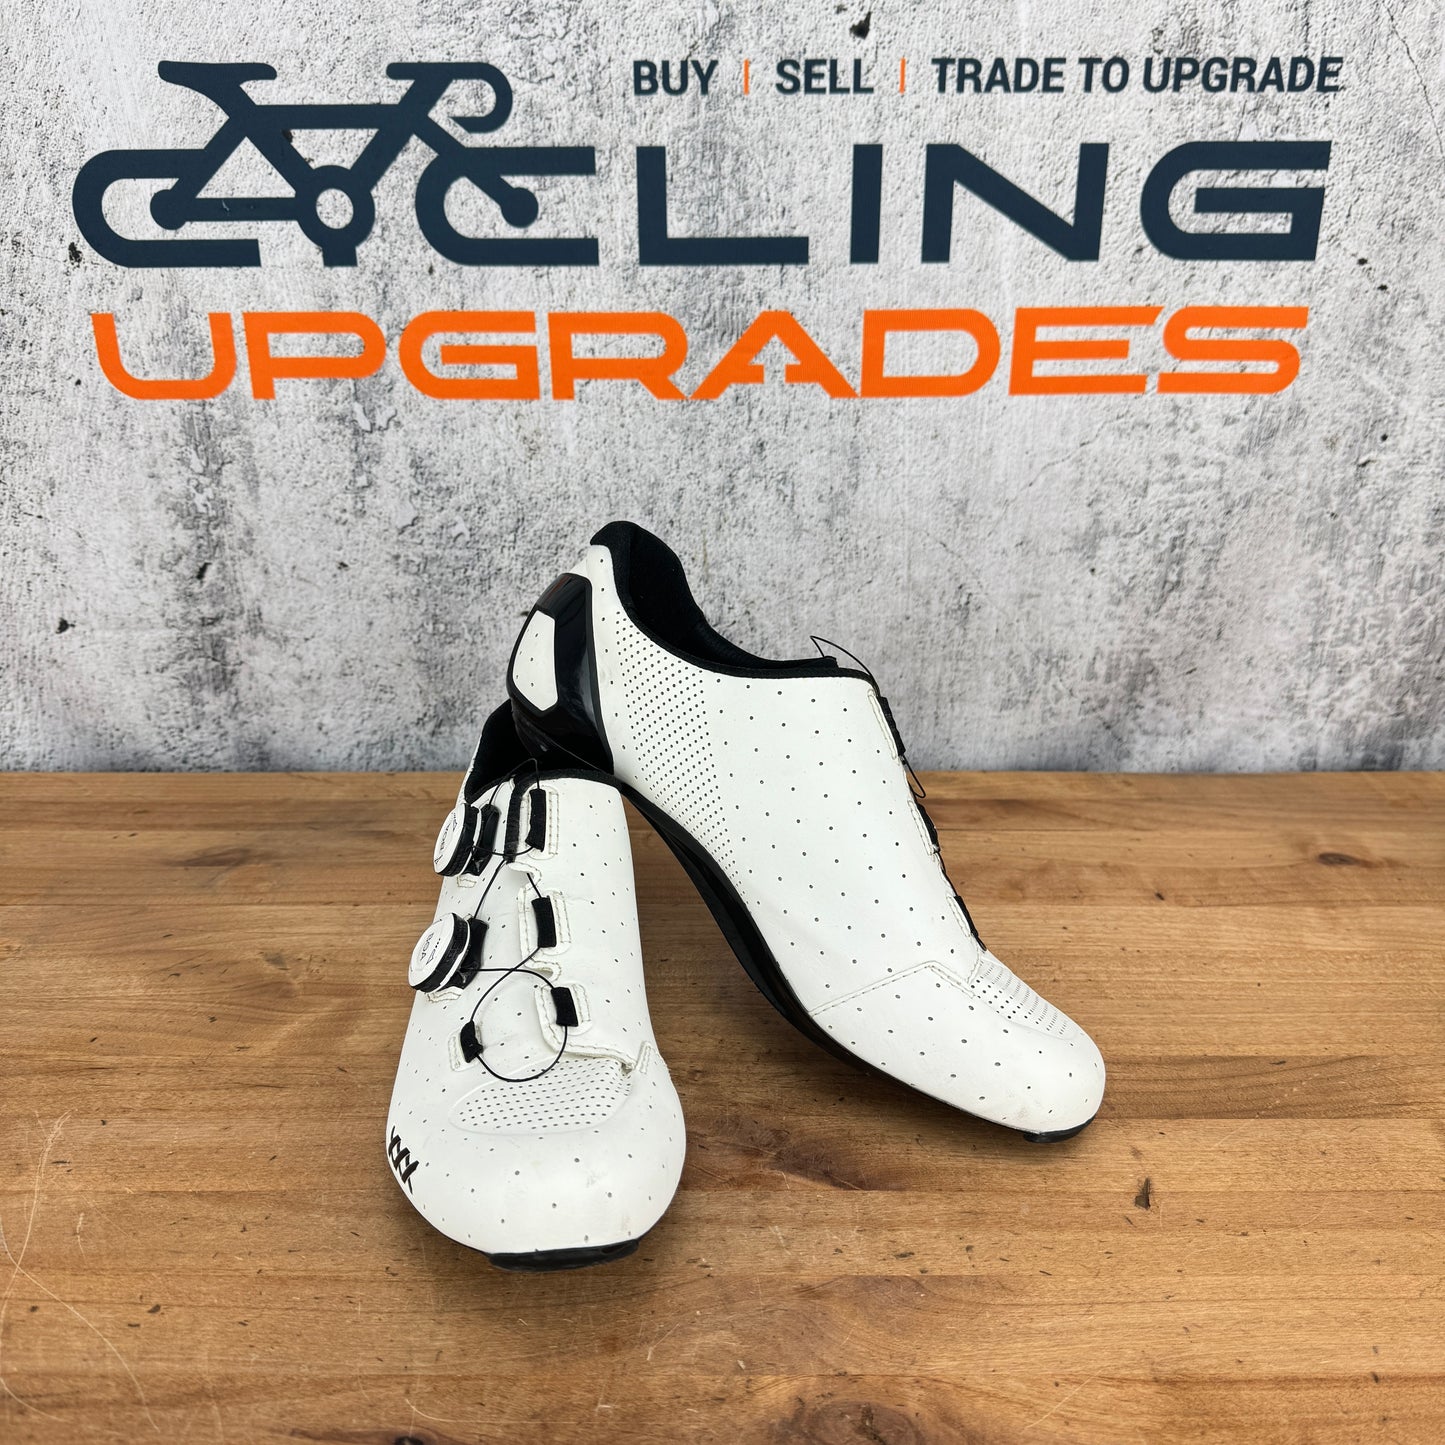 Worn Once! Bontrager XXX RD EU 43 US 10 BOA Dial White Men's Cycling Shoes 560g